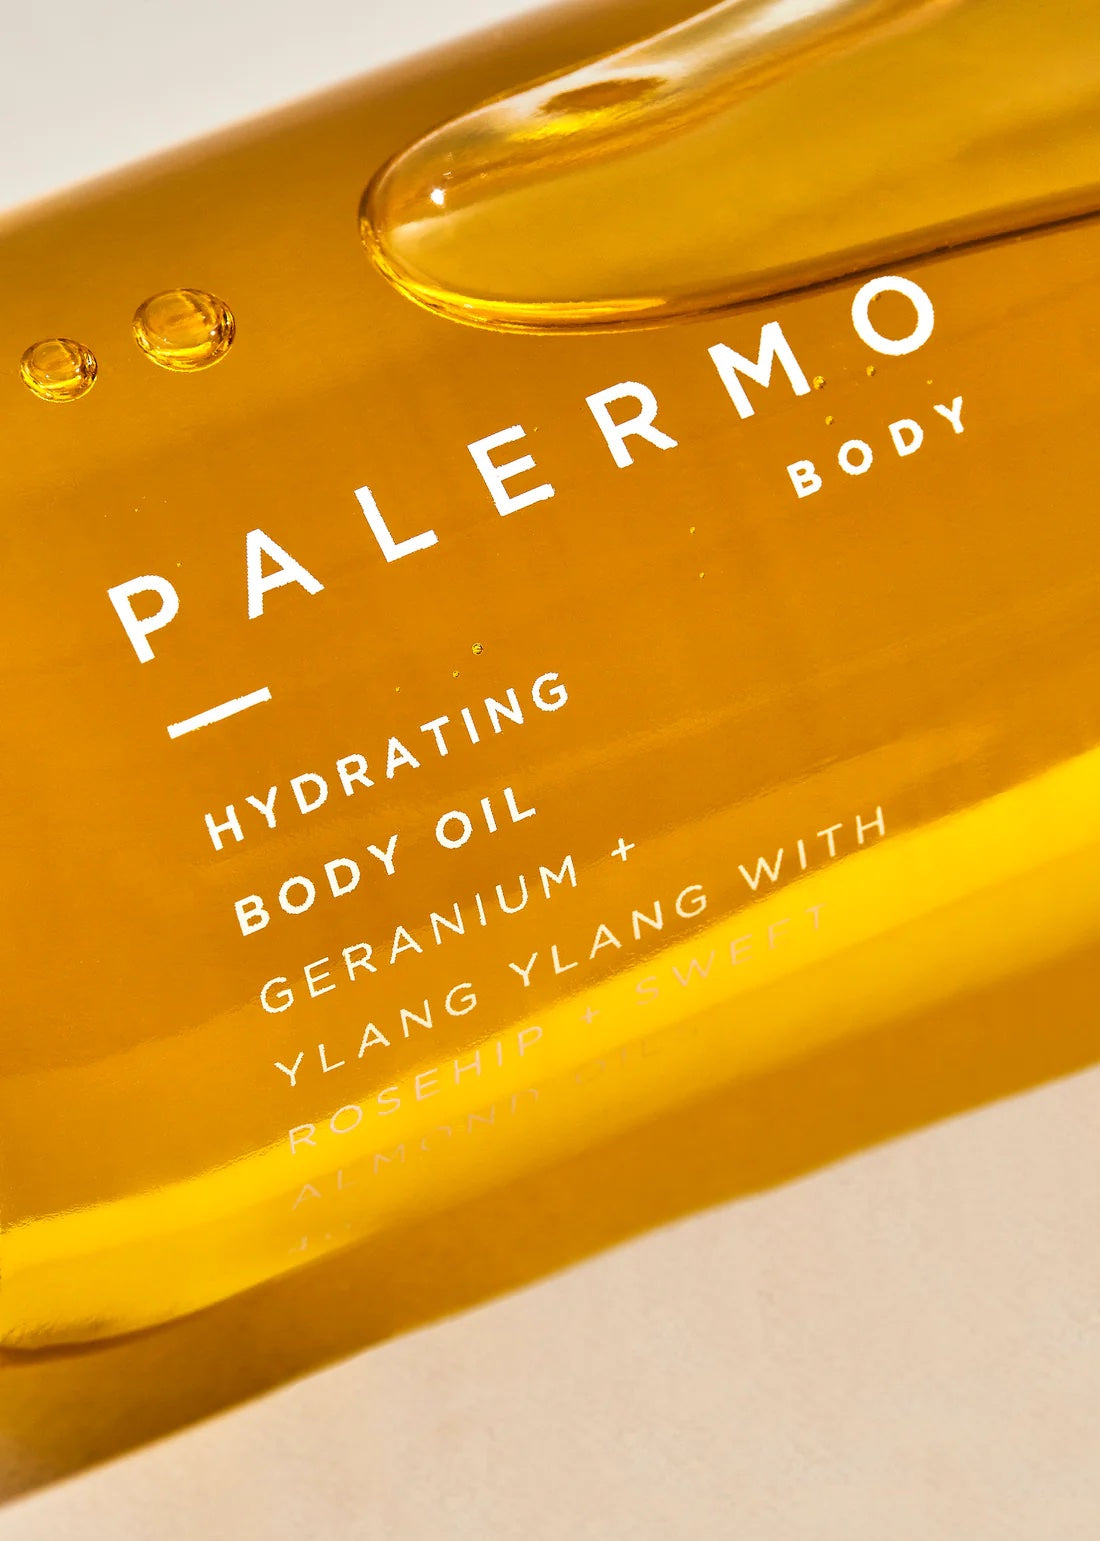 Hydrating Body Oil x Palermo